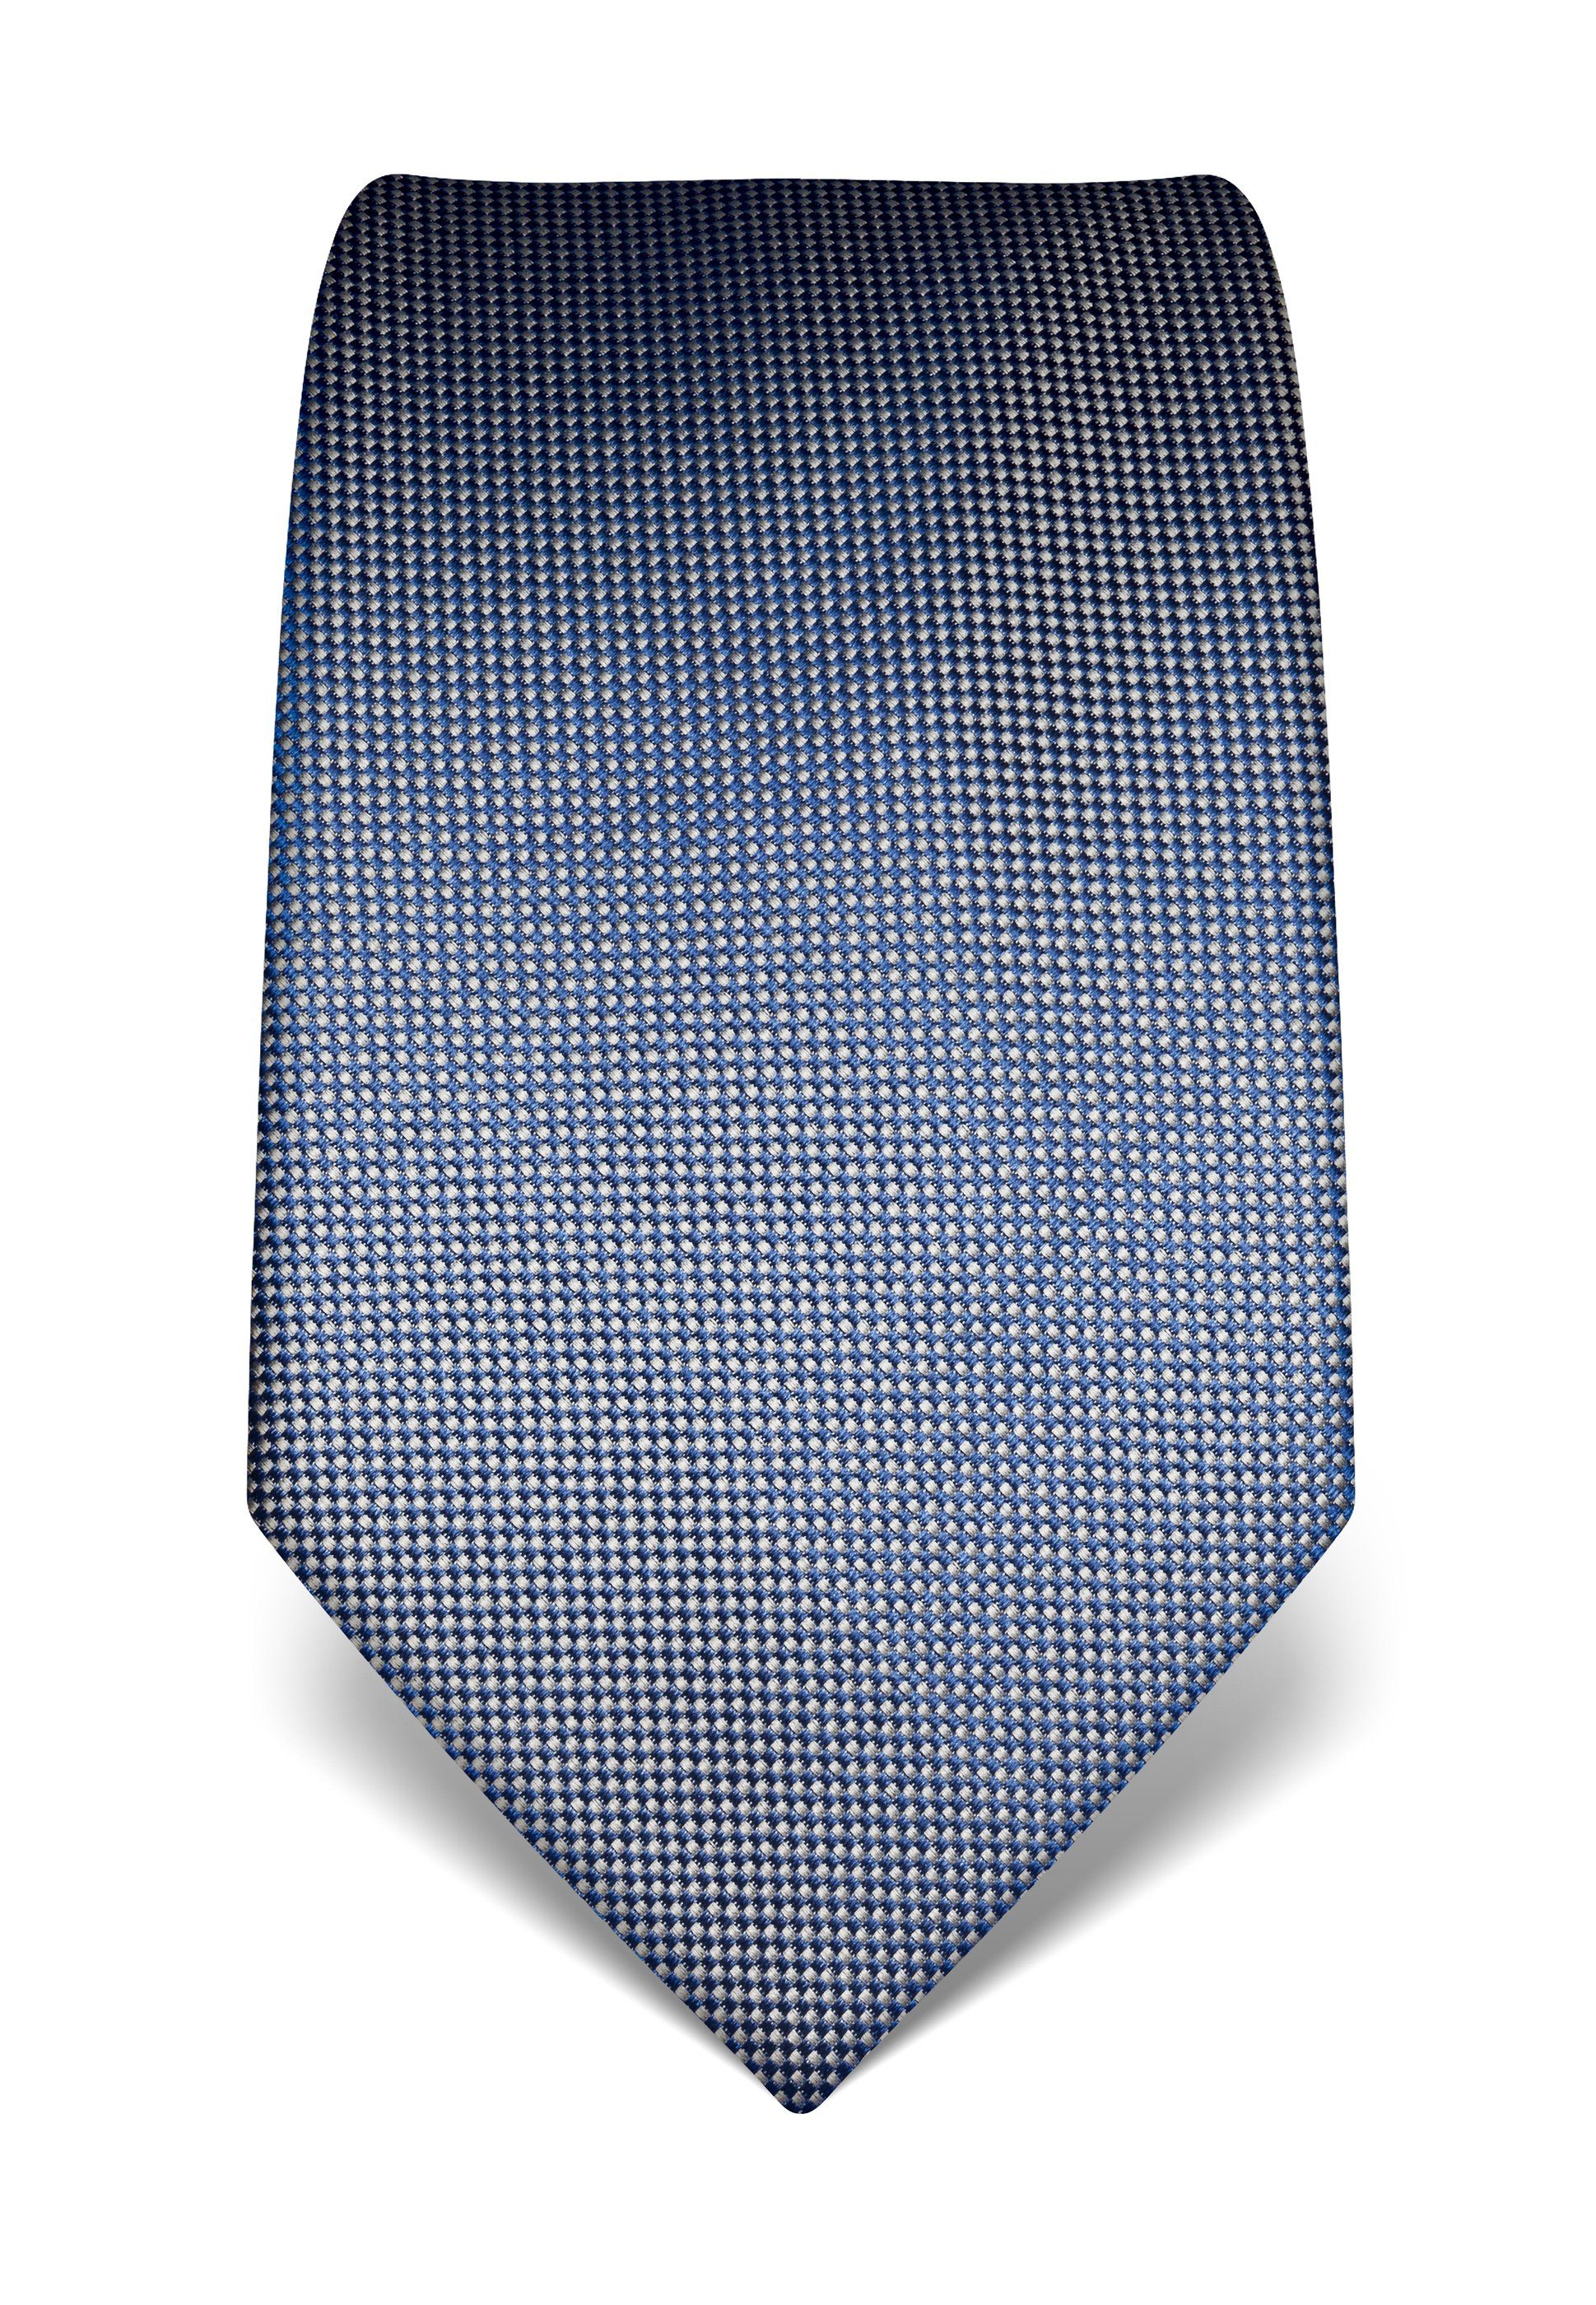 Vincenzo Boretti Krawatte strukturiert graublau